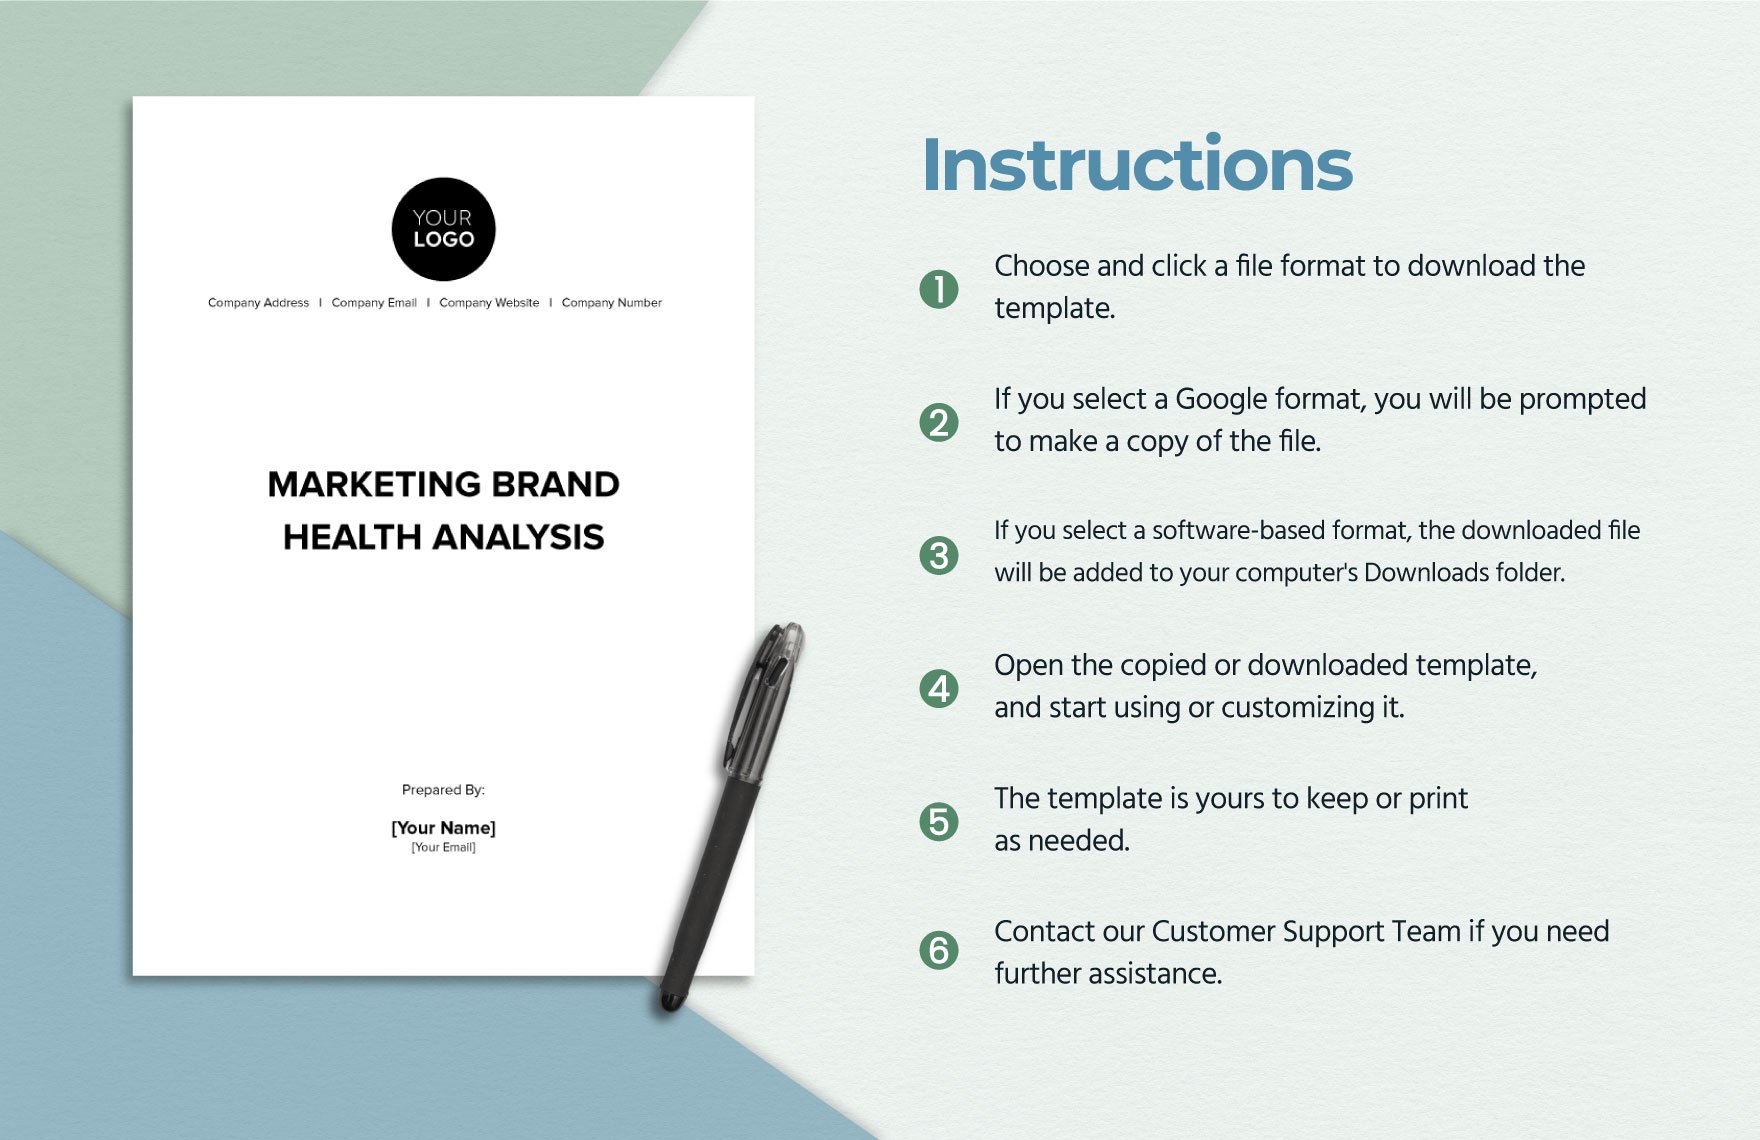 Marketing Brand Health Analysis Template